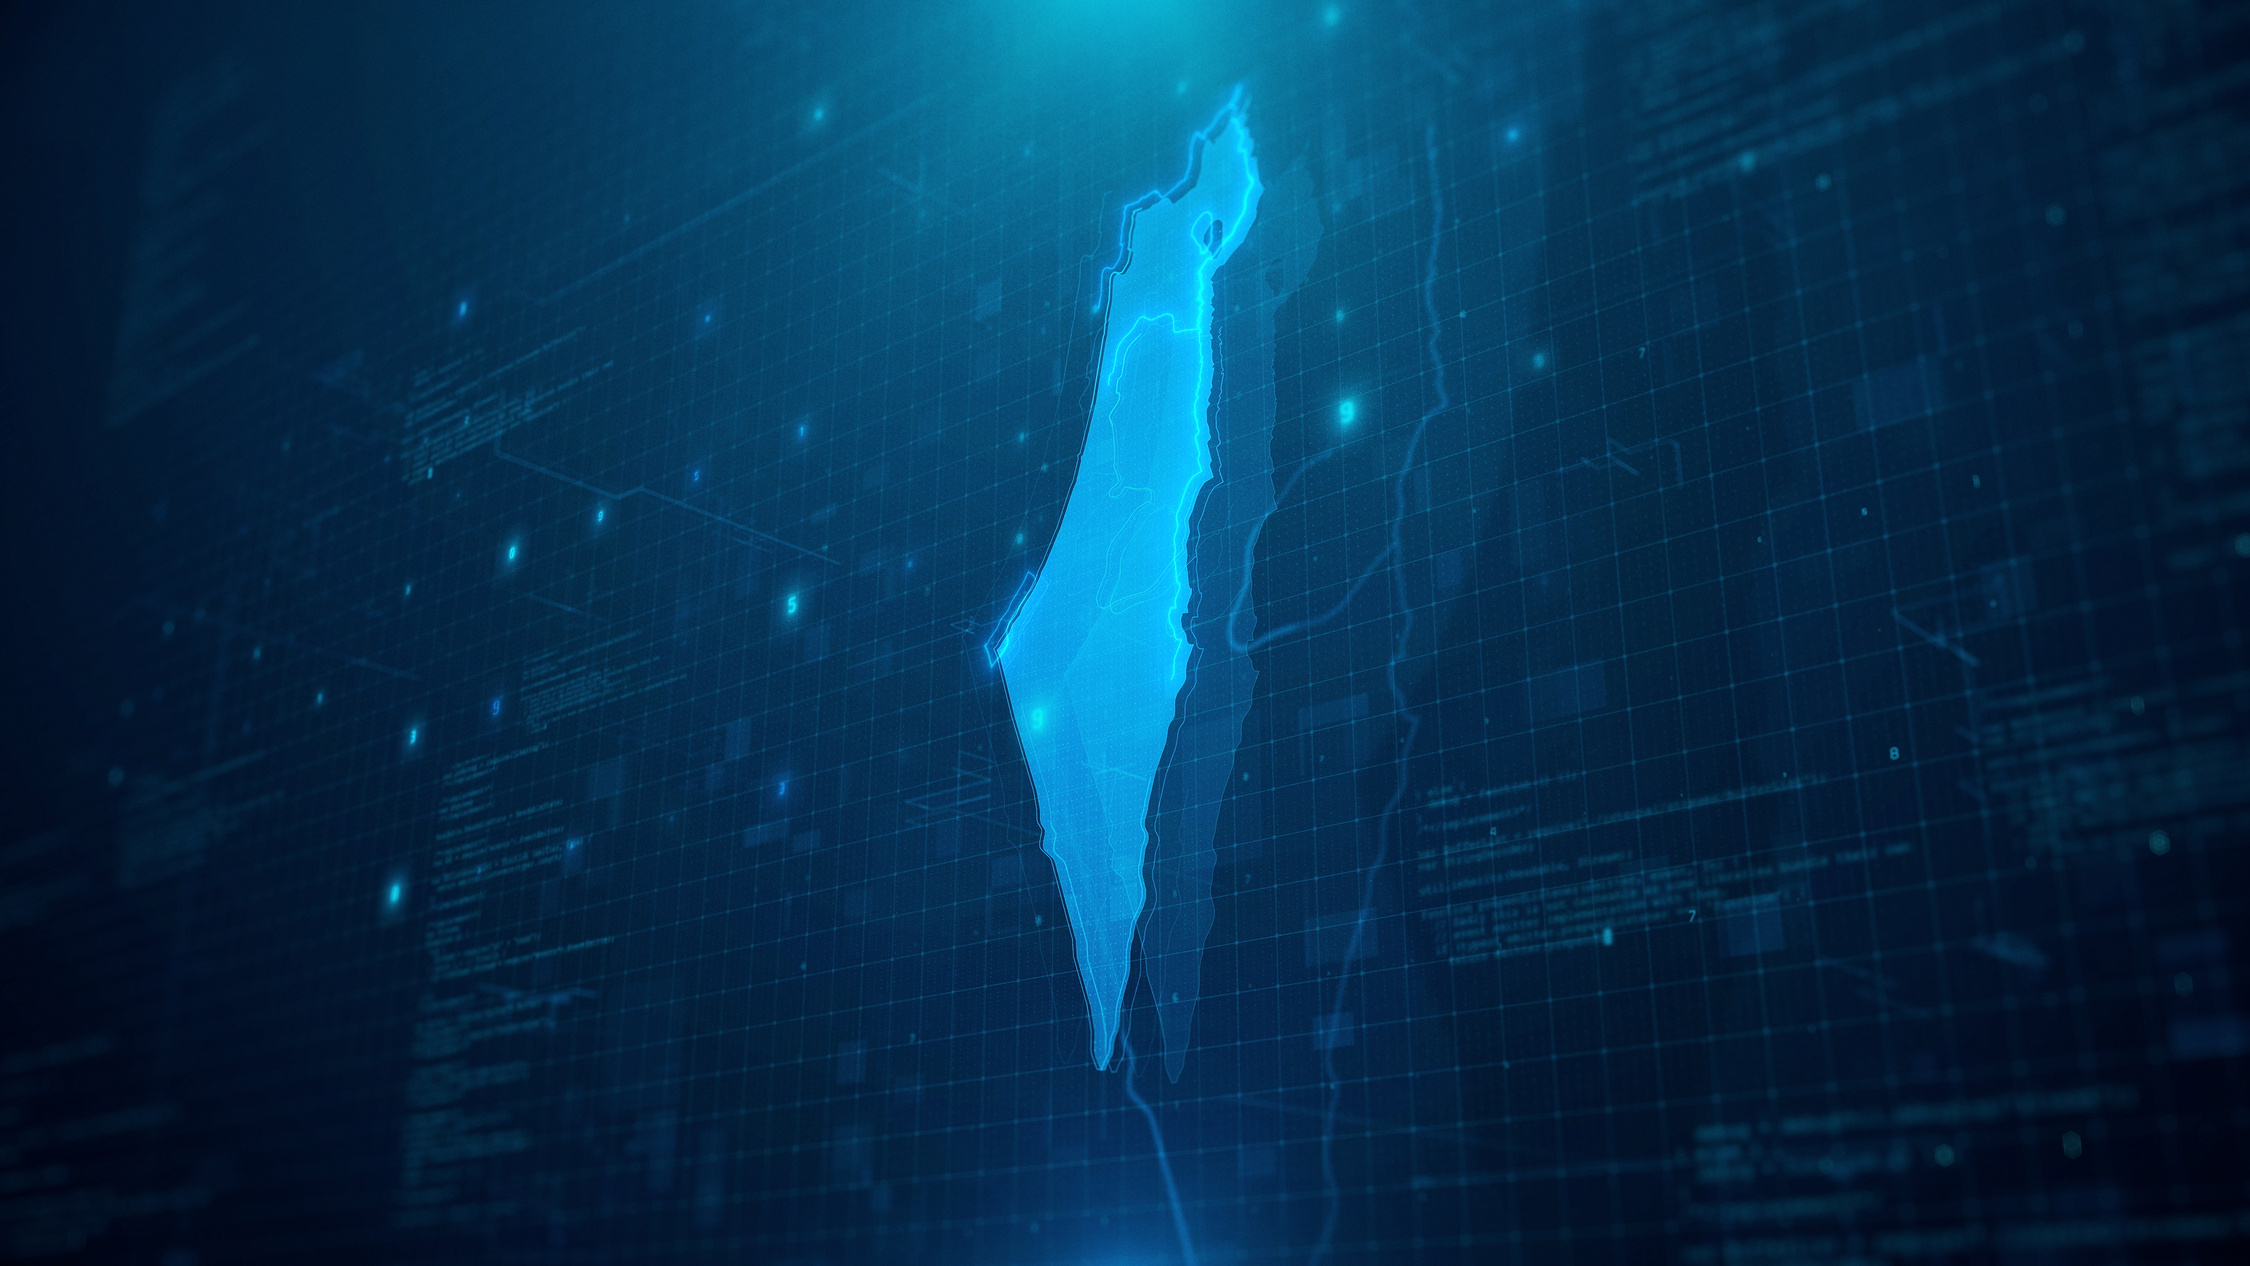 Map of Israel on blue digital background